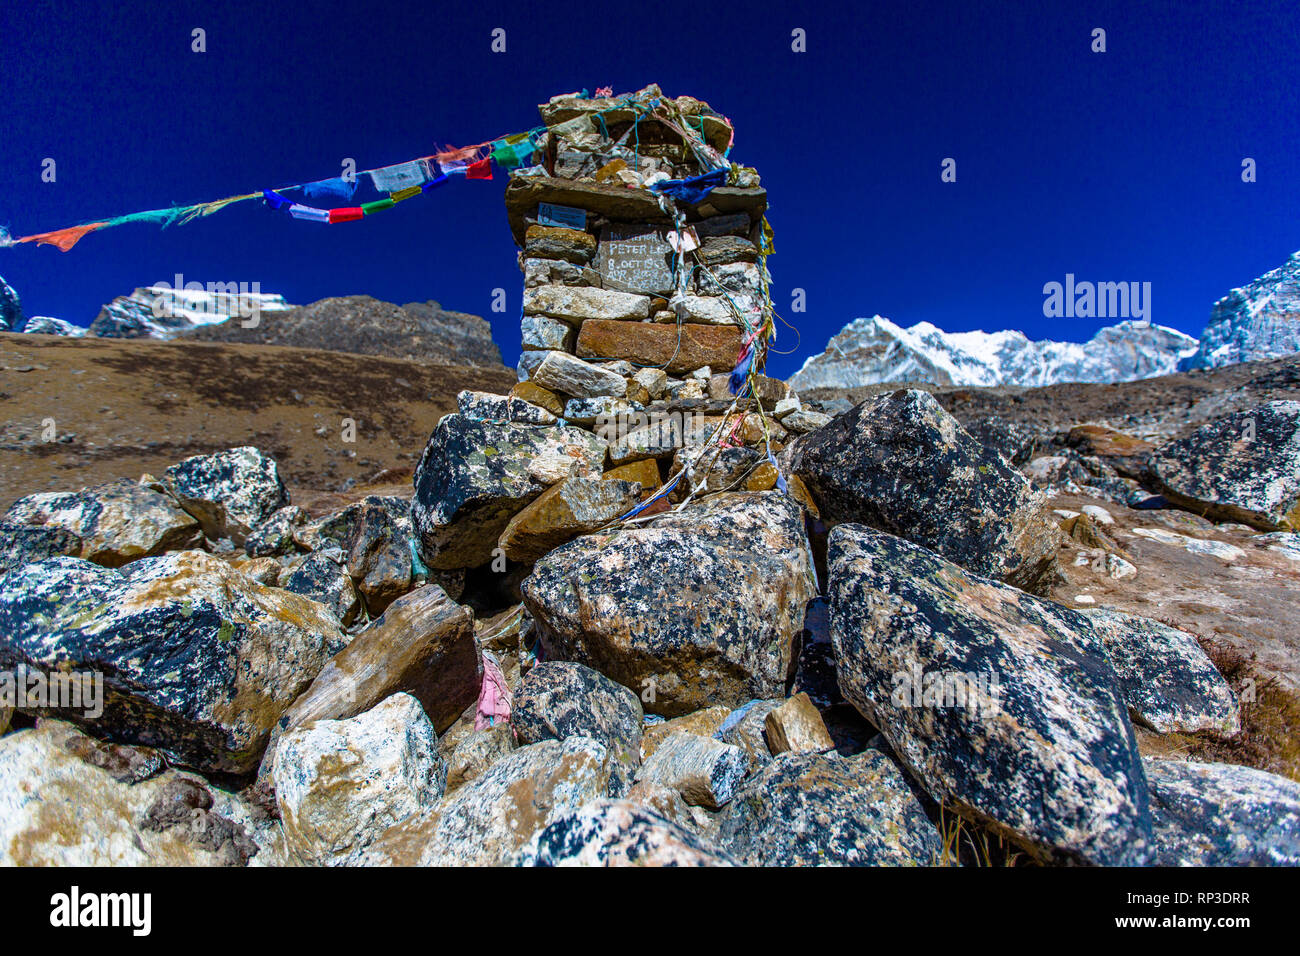 Prayer flags lead off a shrine on the trek towards Mt. Everest, Nepal Stock Photo